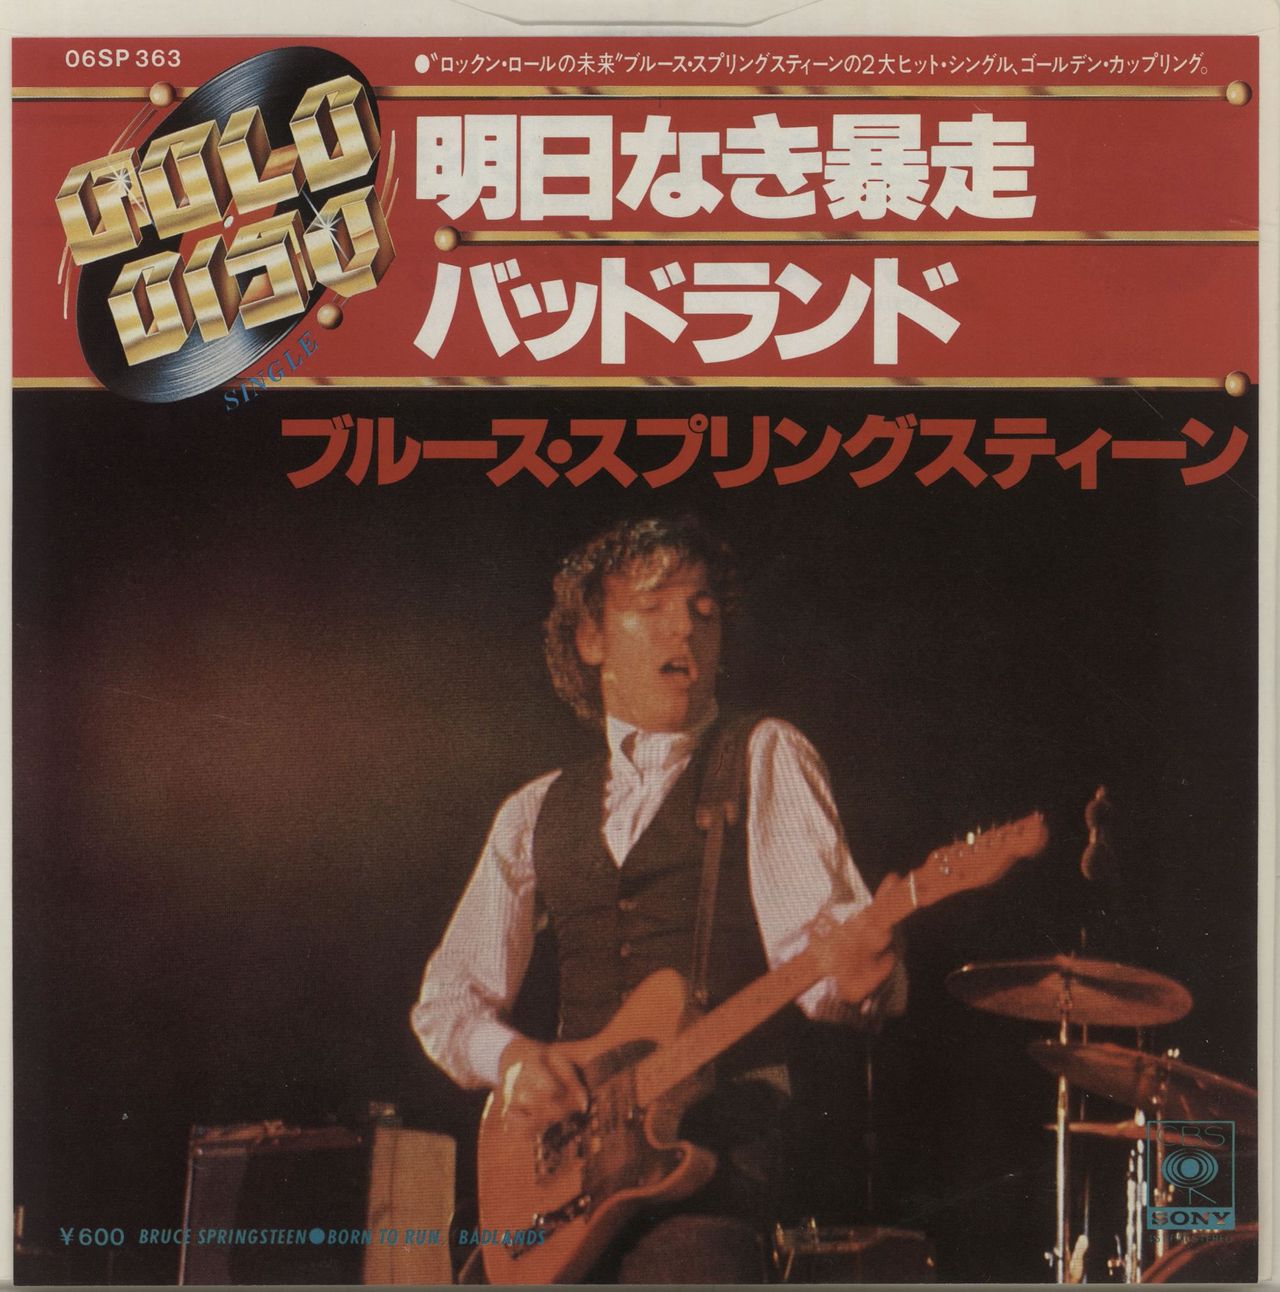 Bruce Springsteen Born Run - Orange Label Japanese 7" vinyl — RareVinyl.com